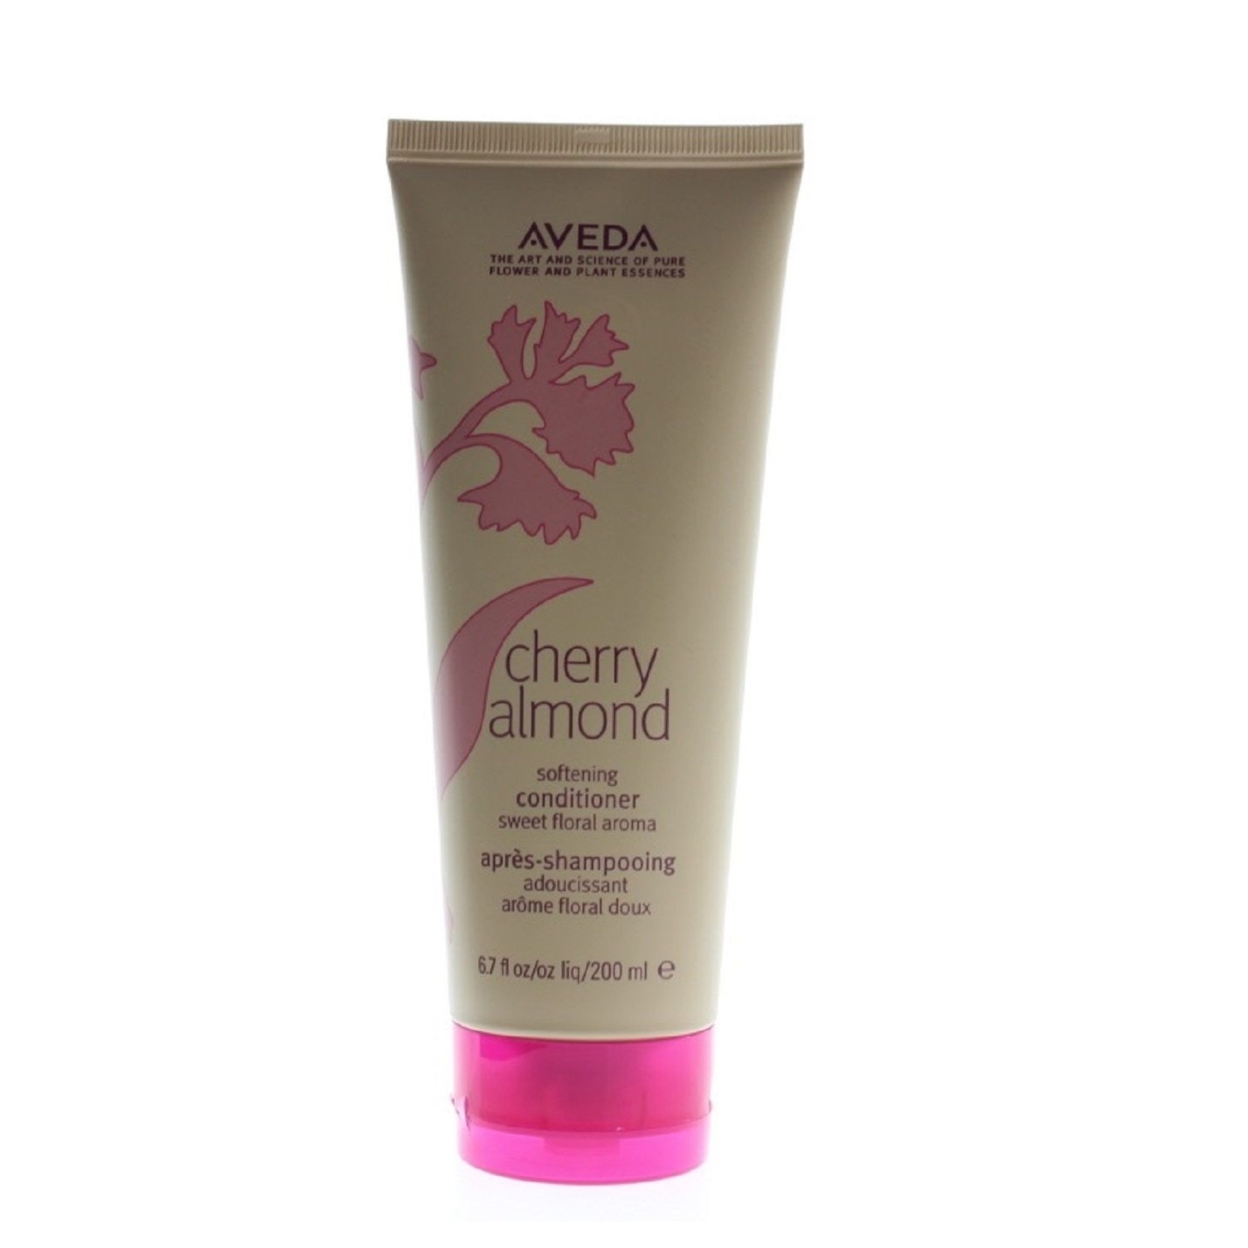 Aveda Cherry Almond Softening Conditioner 6.7oz/200ml